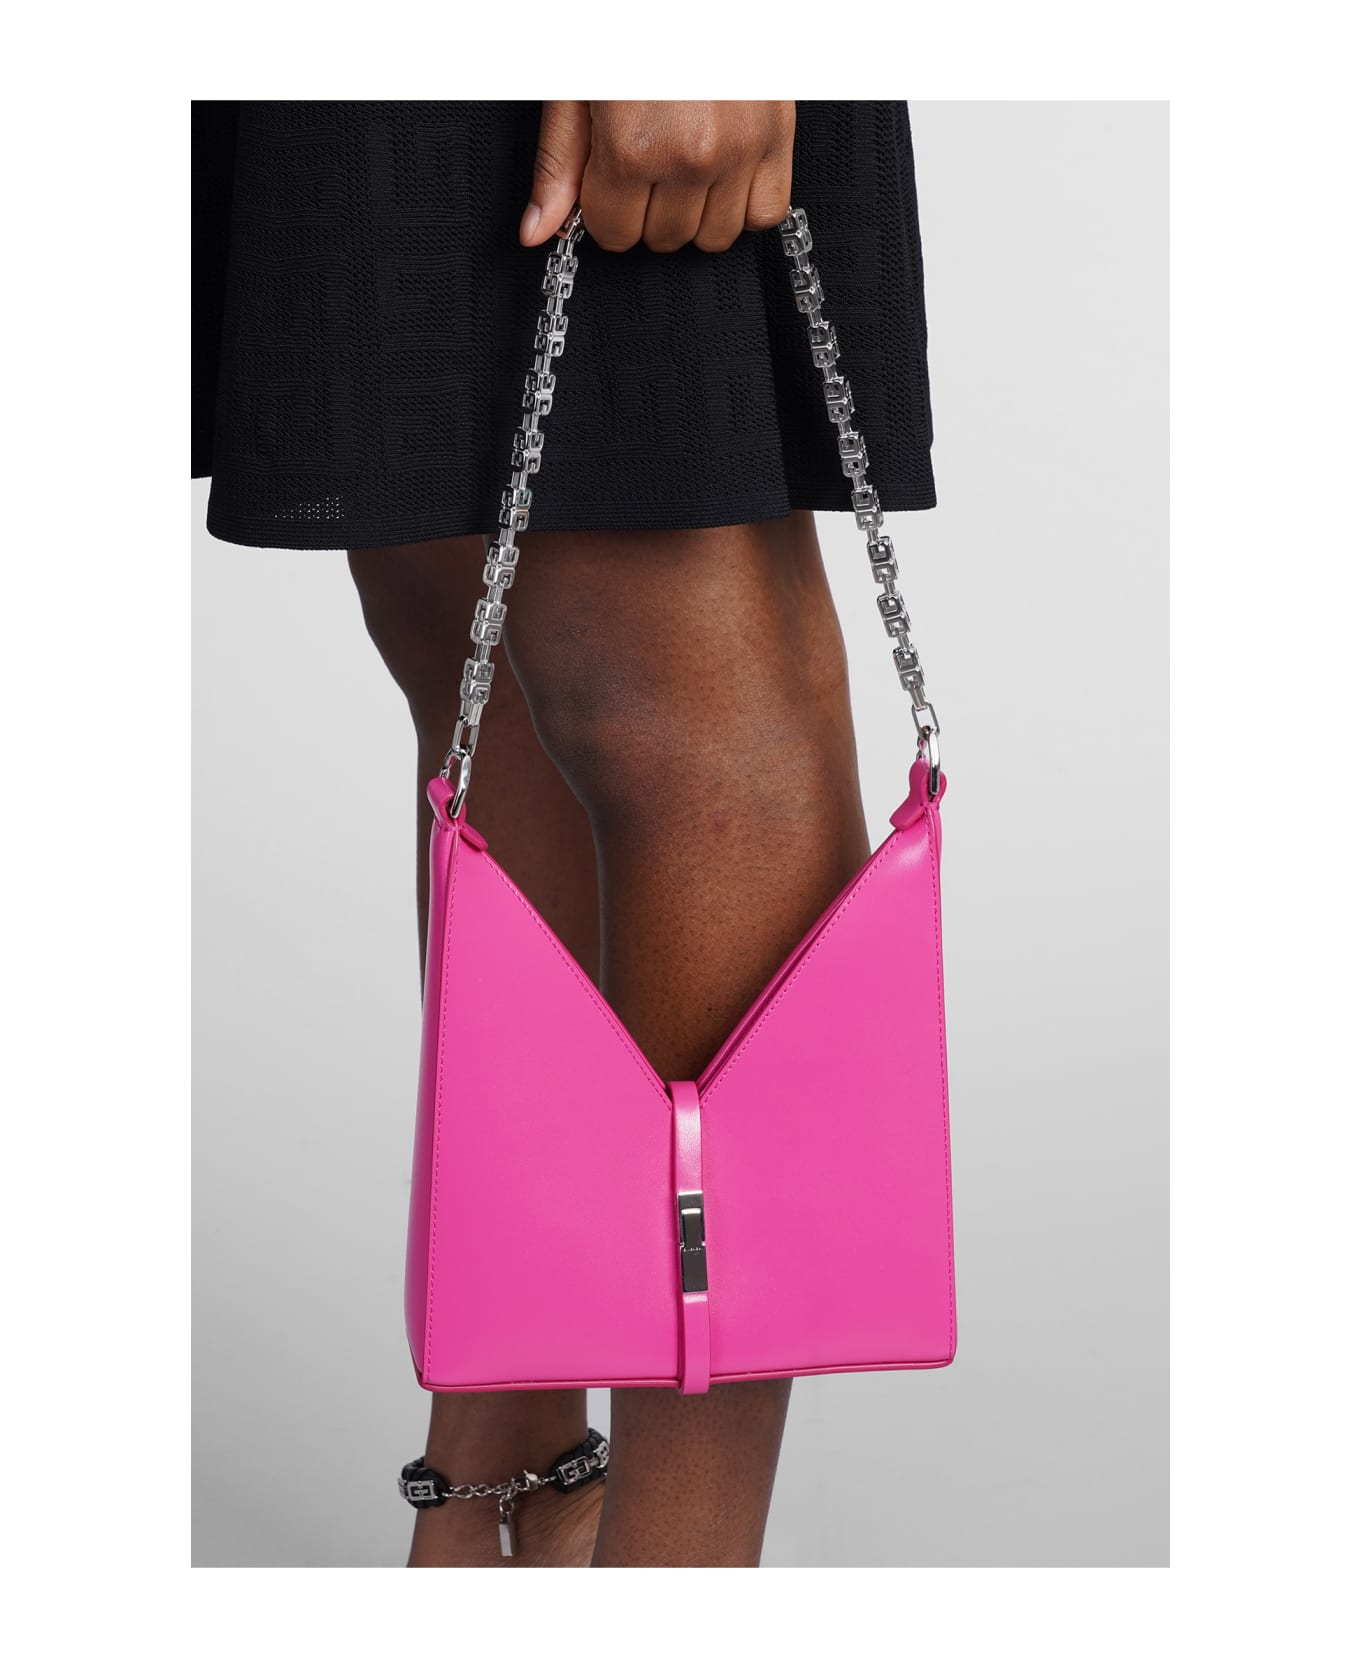 Givenchy Cut Out Shoulder Bag In Rose-pink Leather - rose-pink